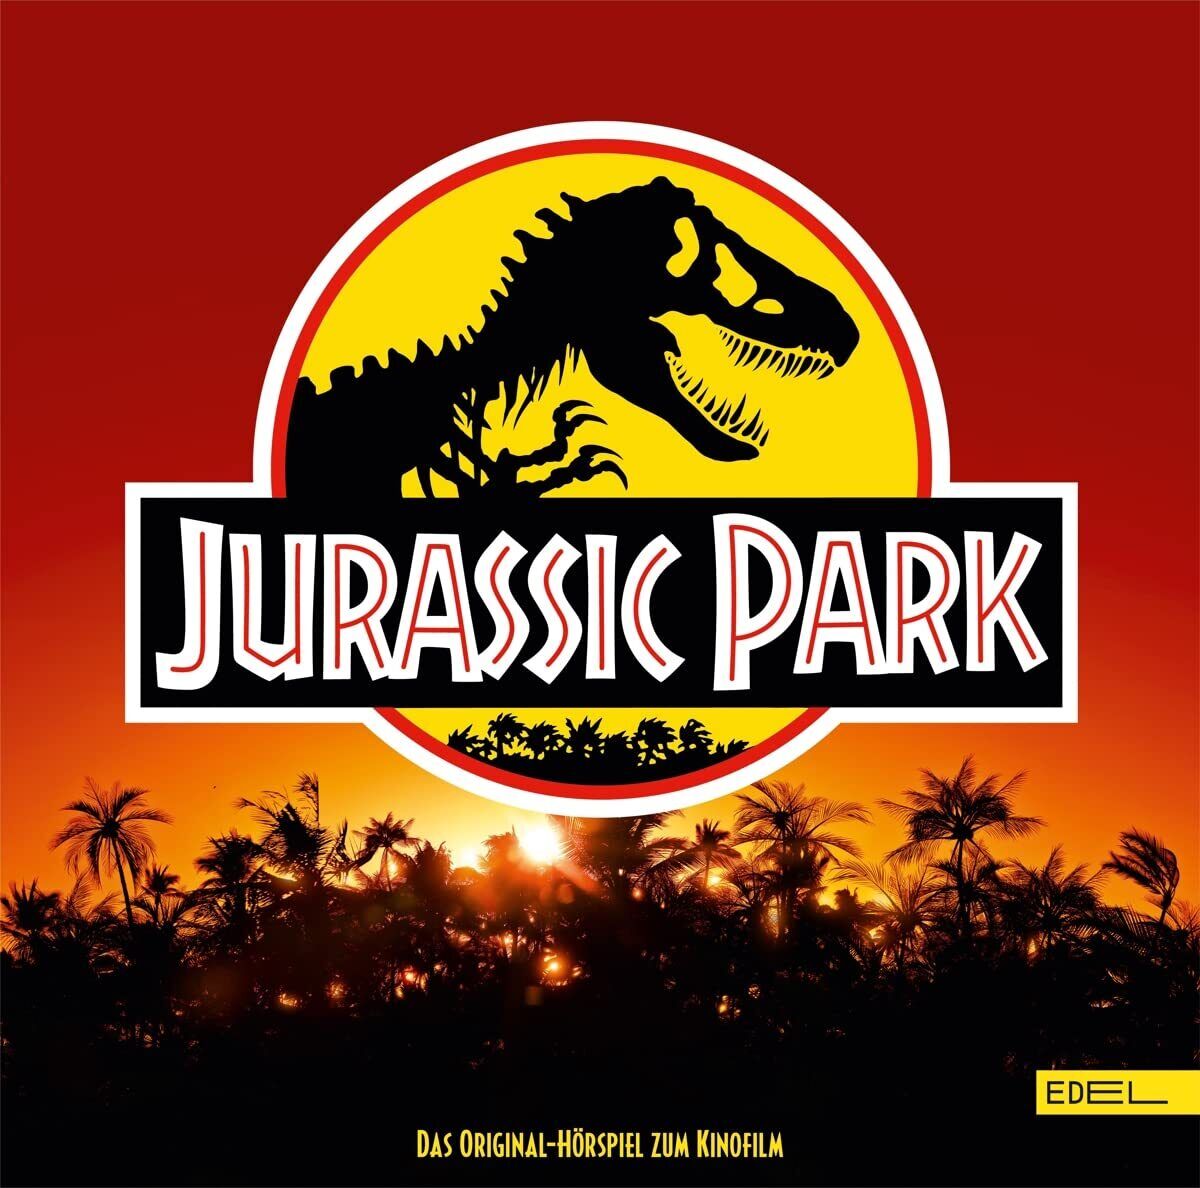 Jurassic Park Jurassic Park – Das Original-Hörspiel zum Kinofilm als Dop (Vinyl)